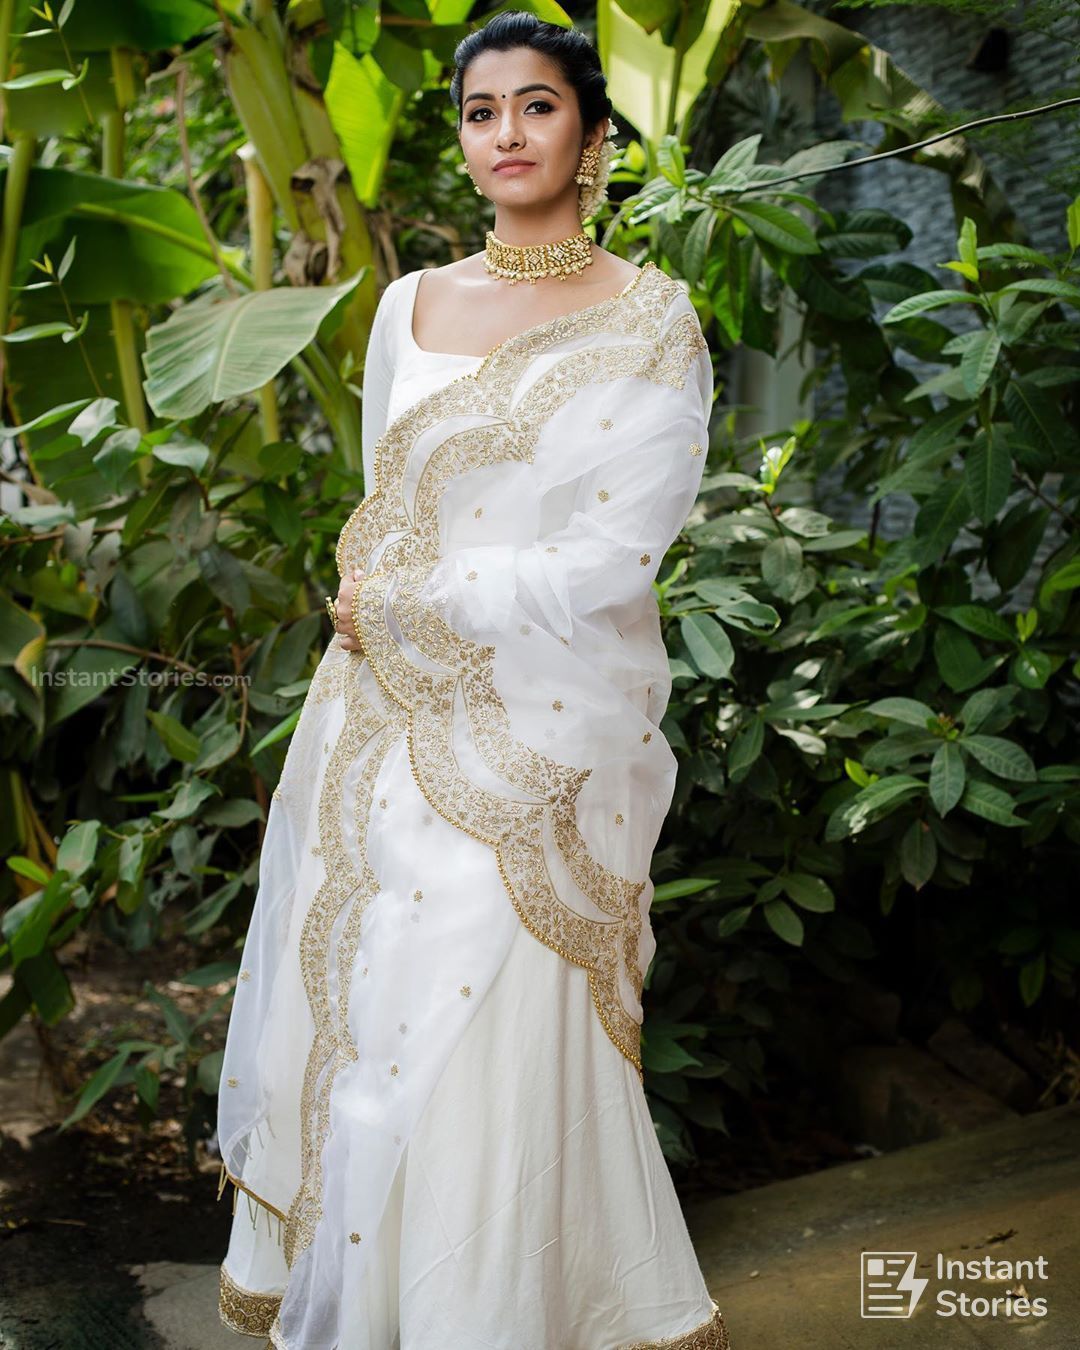 Priya Bhavani Shankars Hot Photoshoot Pictures in White Saree (1080p) (7323) - Priya Bhavani Shankar